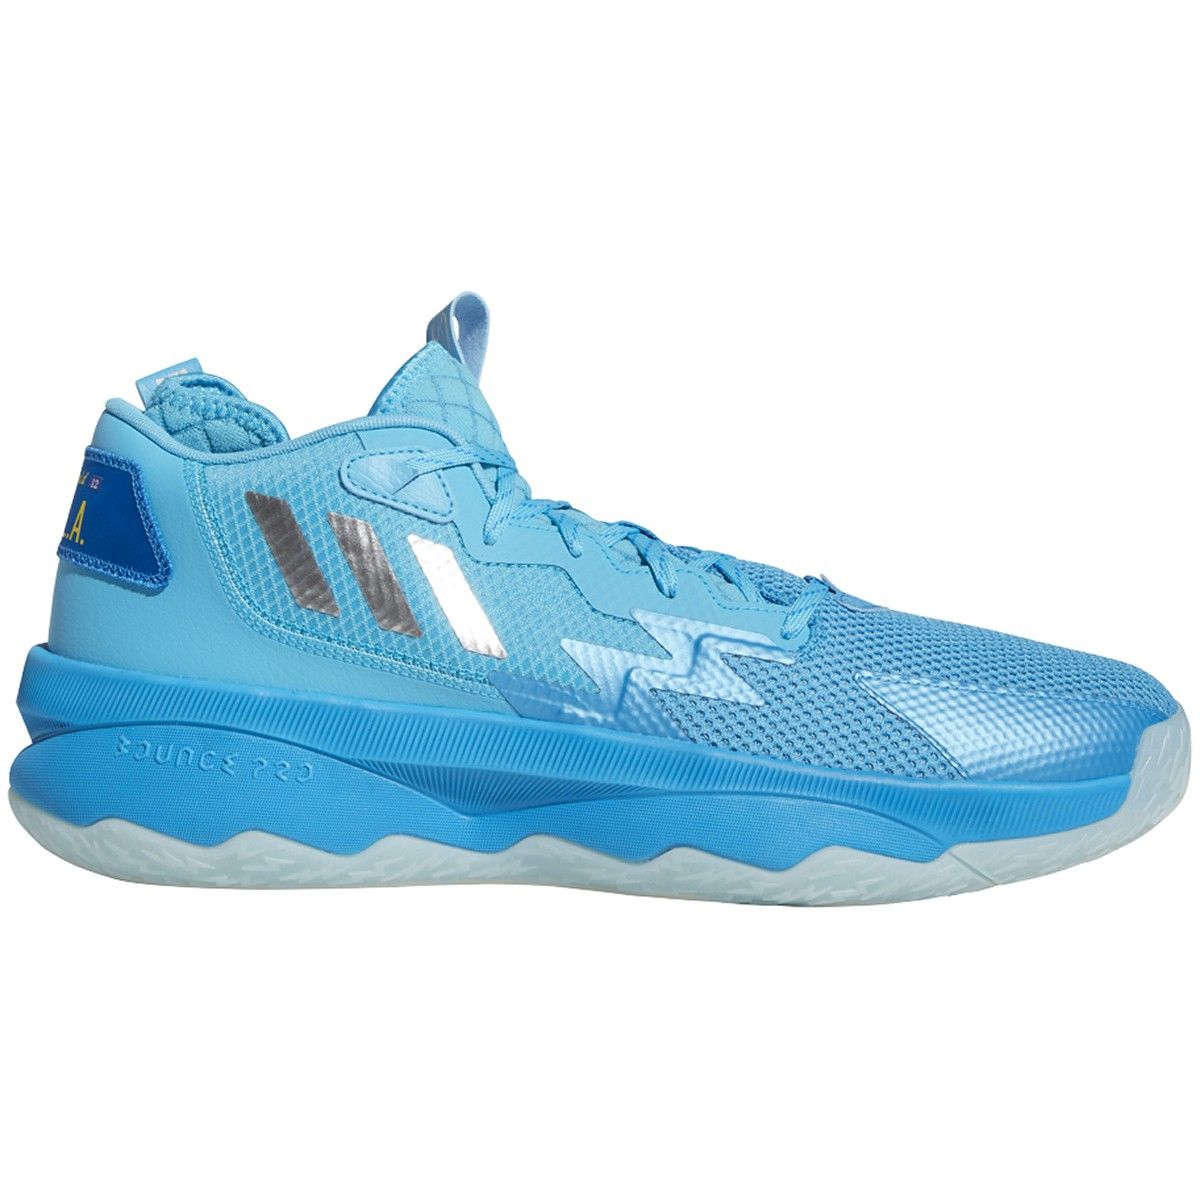 adidas Dame 8 - Damian Lillard - Mens Basketball Shoes | GY6465